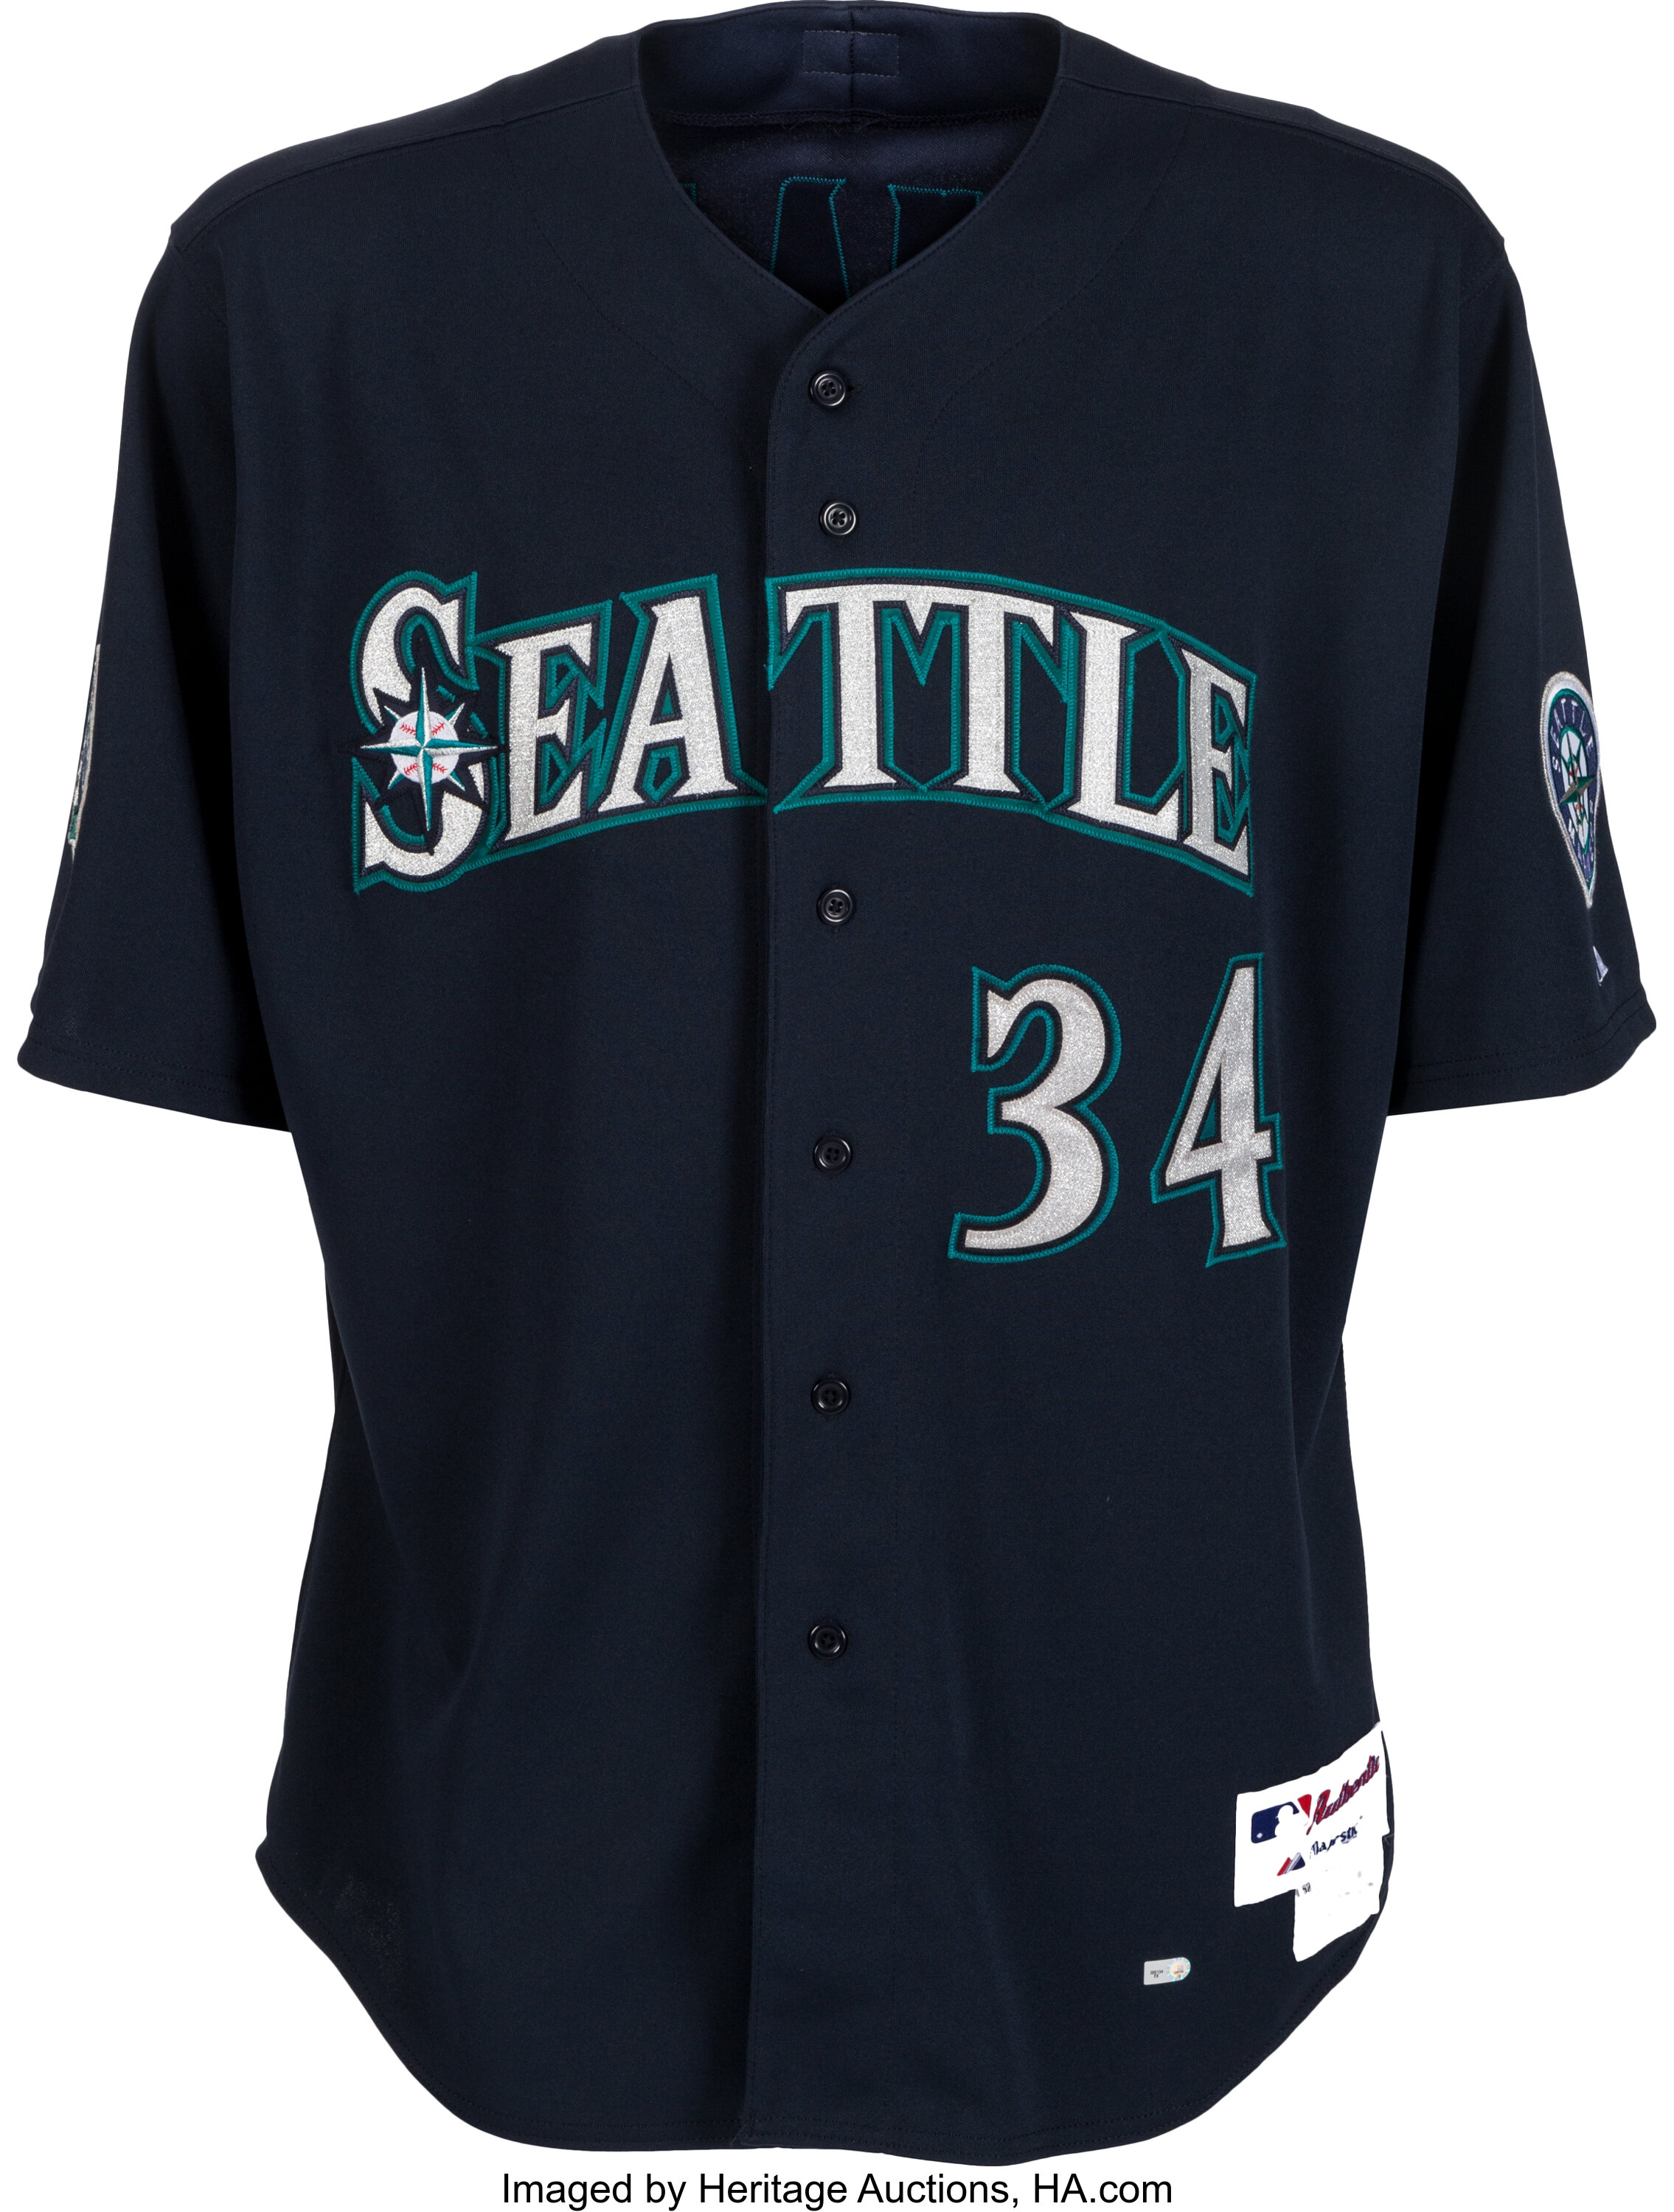 Seattle Mariners Felix Hernandez Team-Issued Green Jersey - 9/28